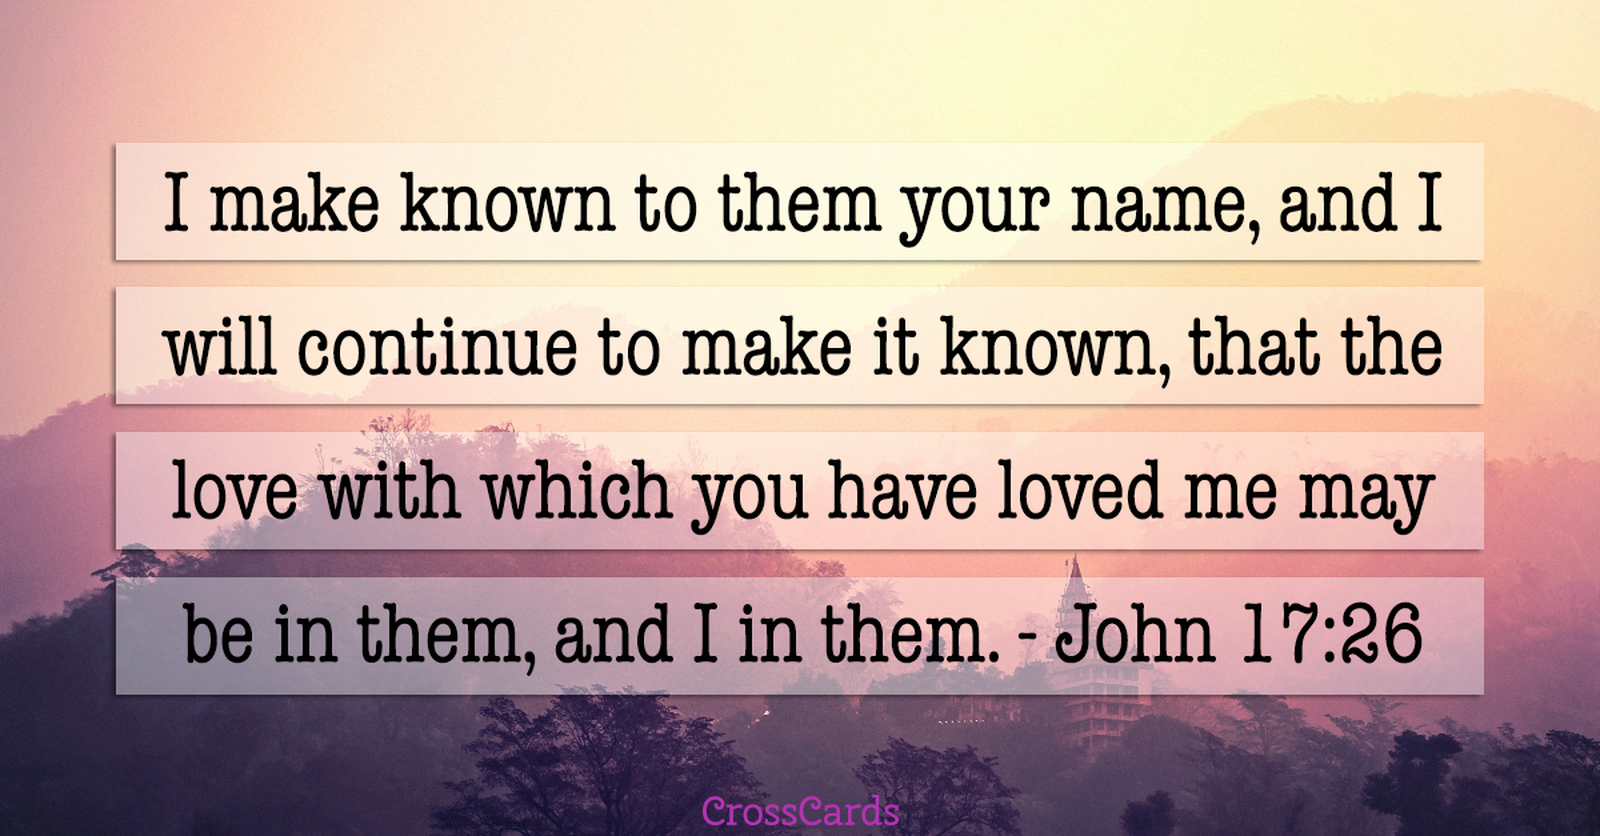 John 17:26 ecard, online card